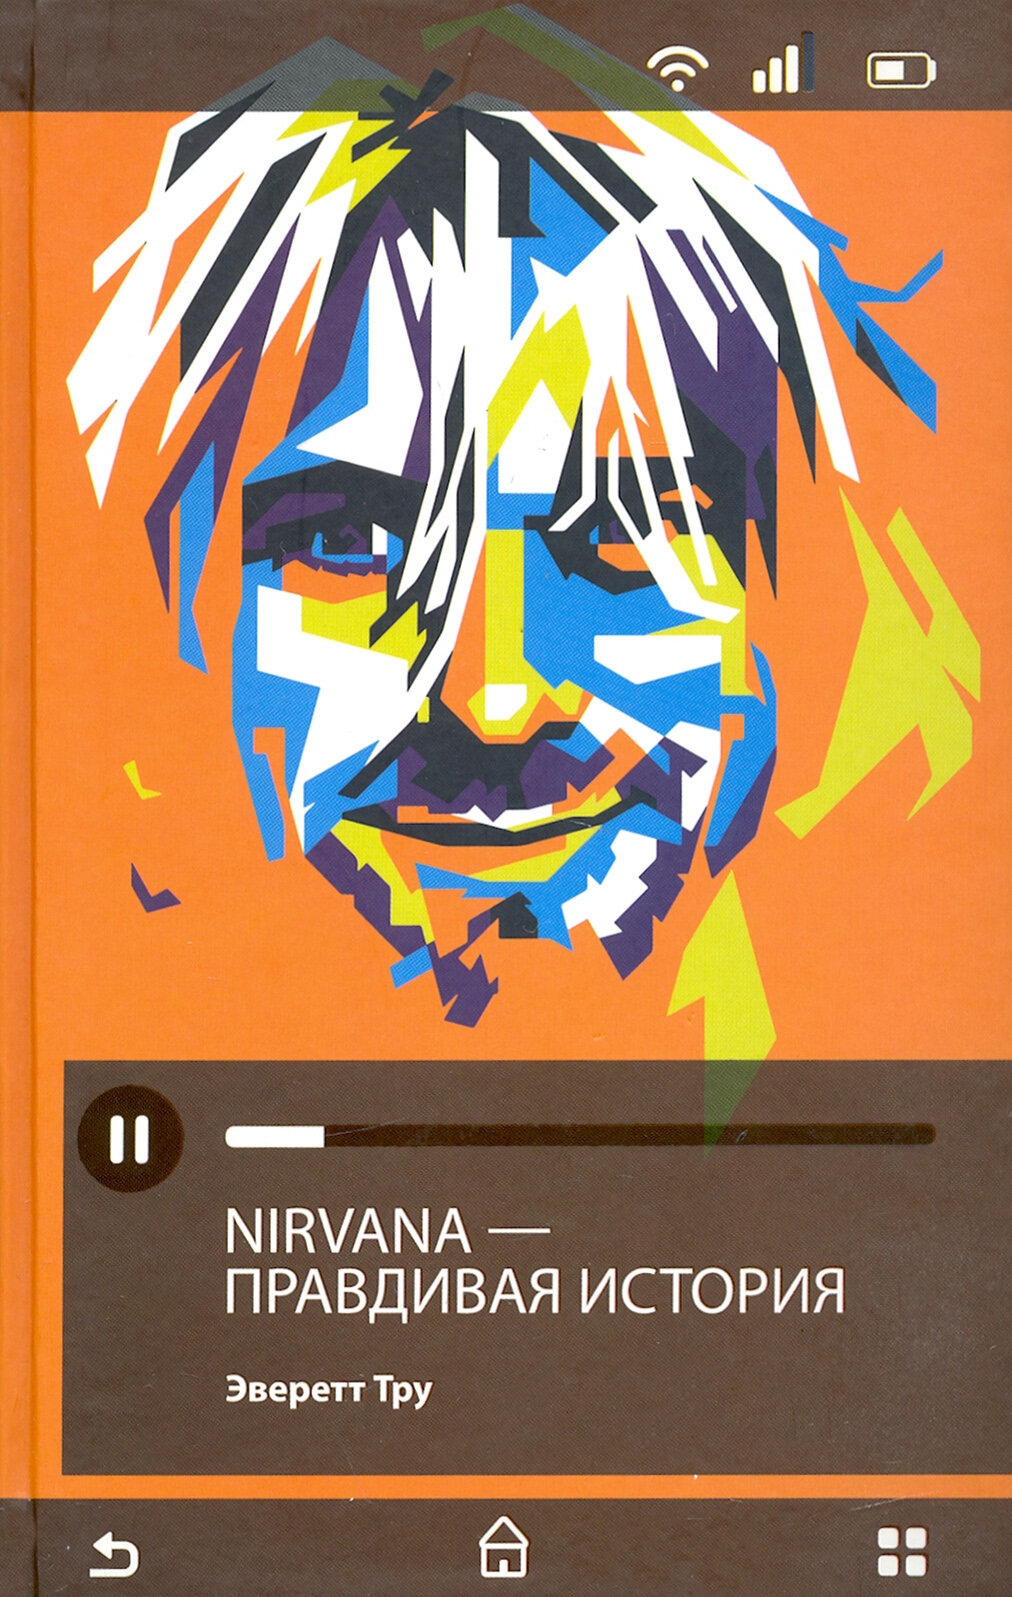 Nirvana = Нирвана. Правдивая история - фото №5